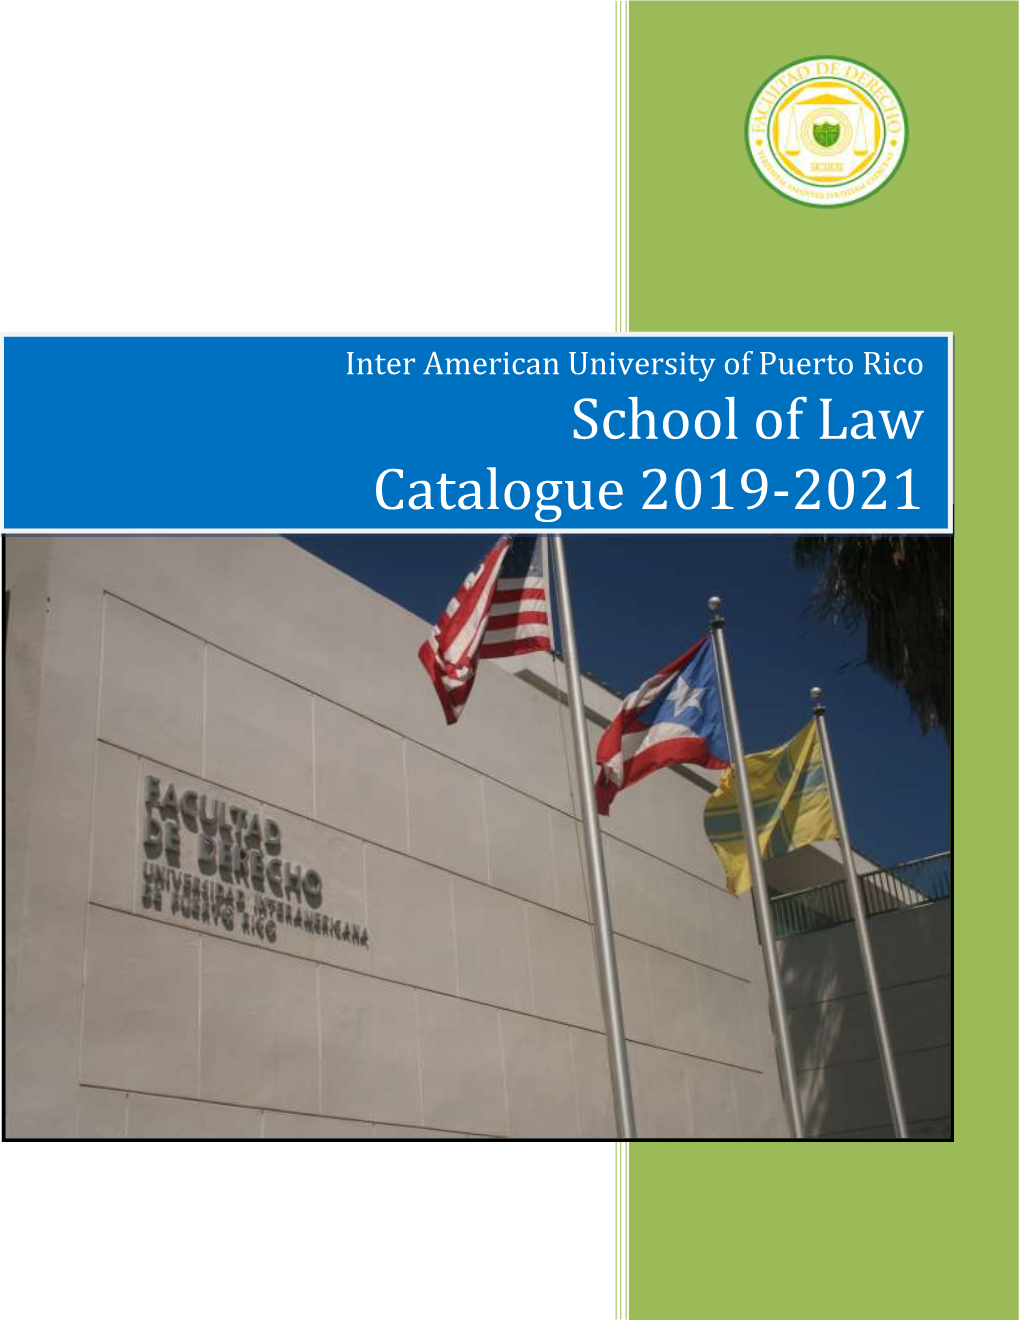 School of Law Catalogue 2019-2021